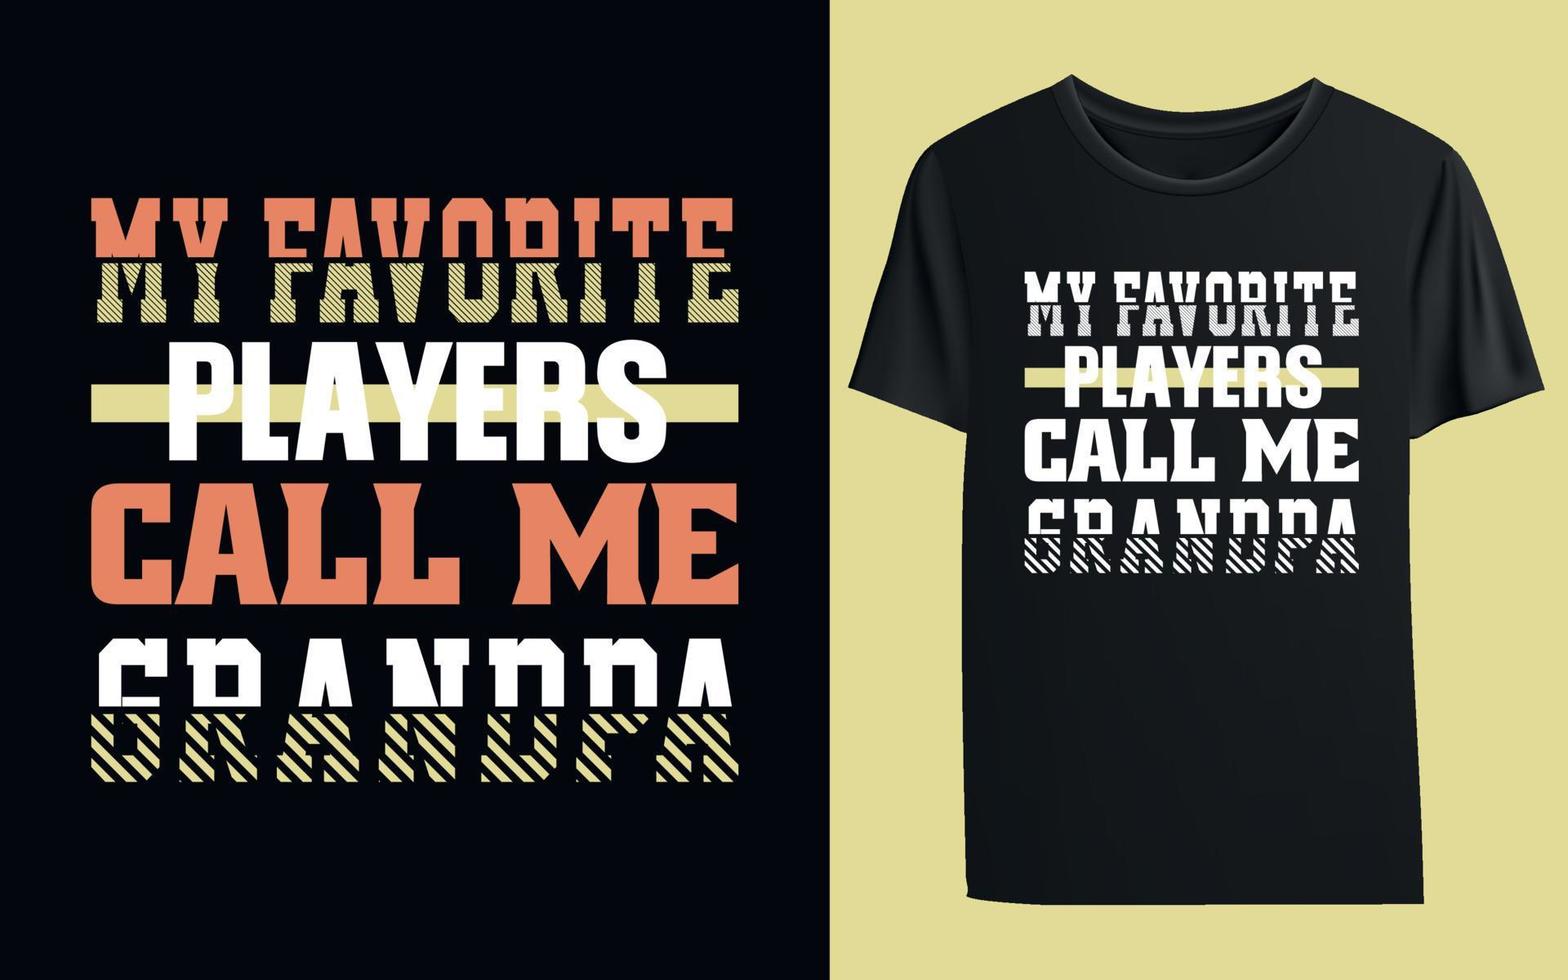 My favorite players call me grandpa t-shirt vector